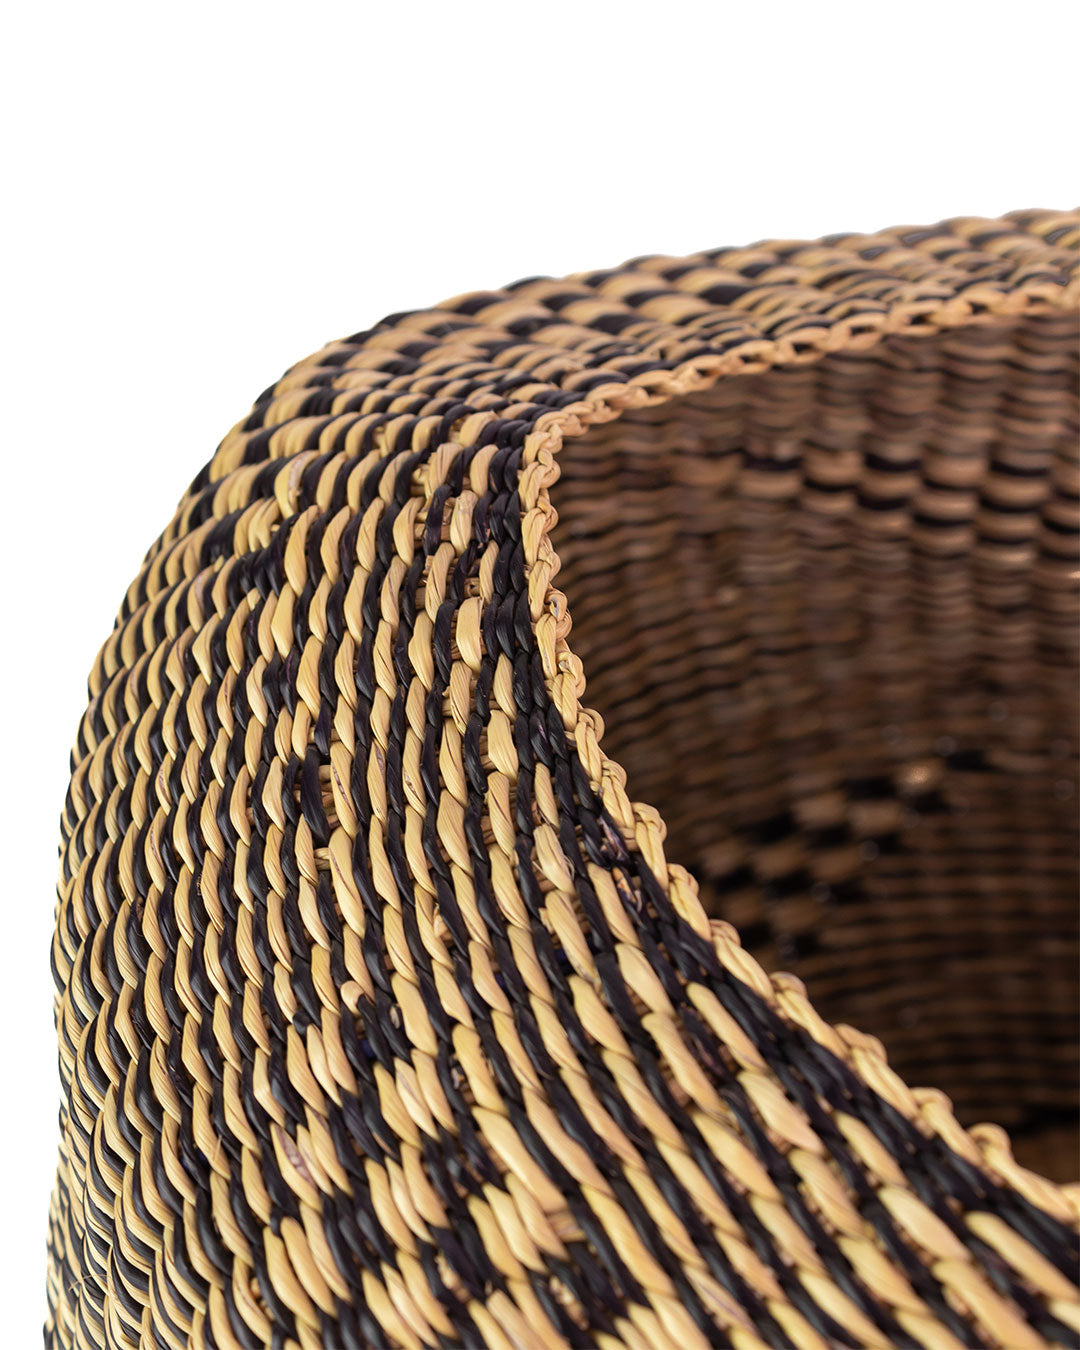 Aduco Basket Hand-woven Aketekete